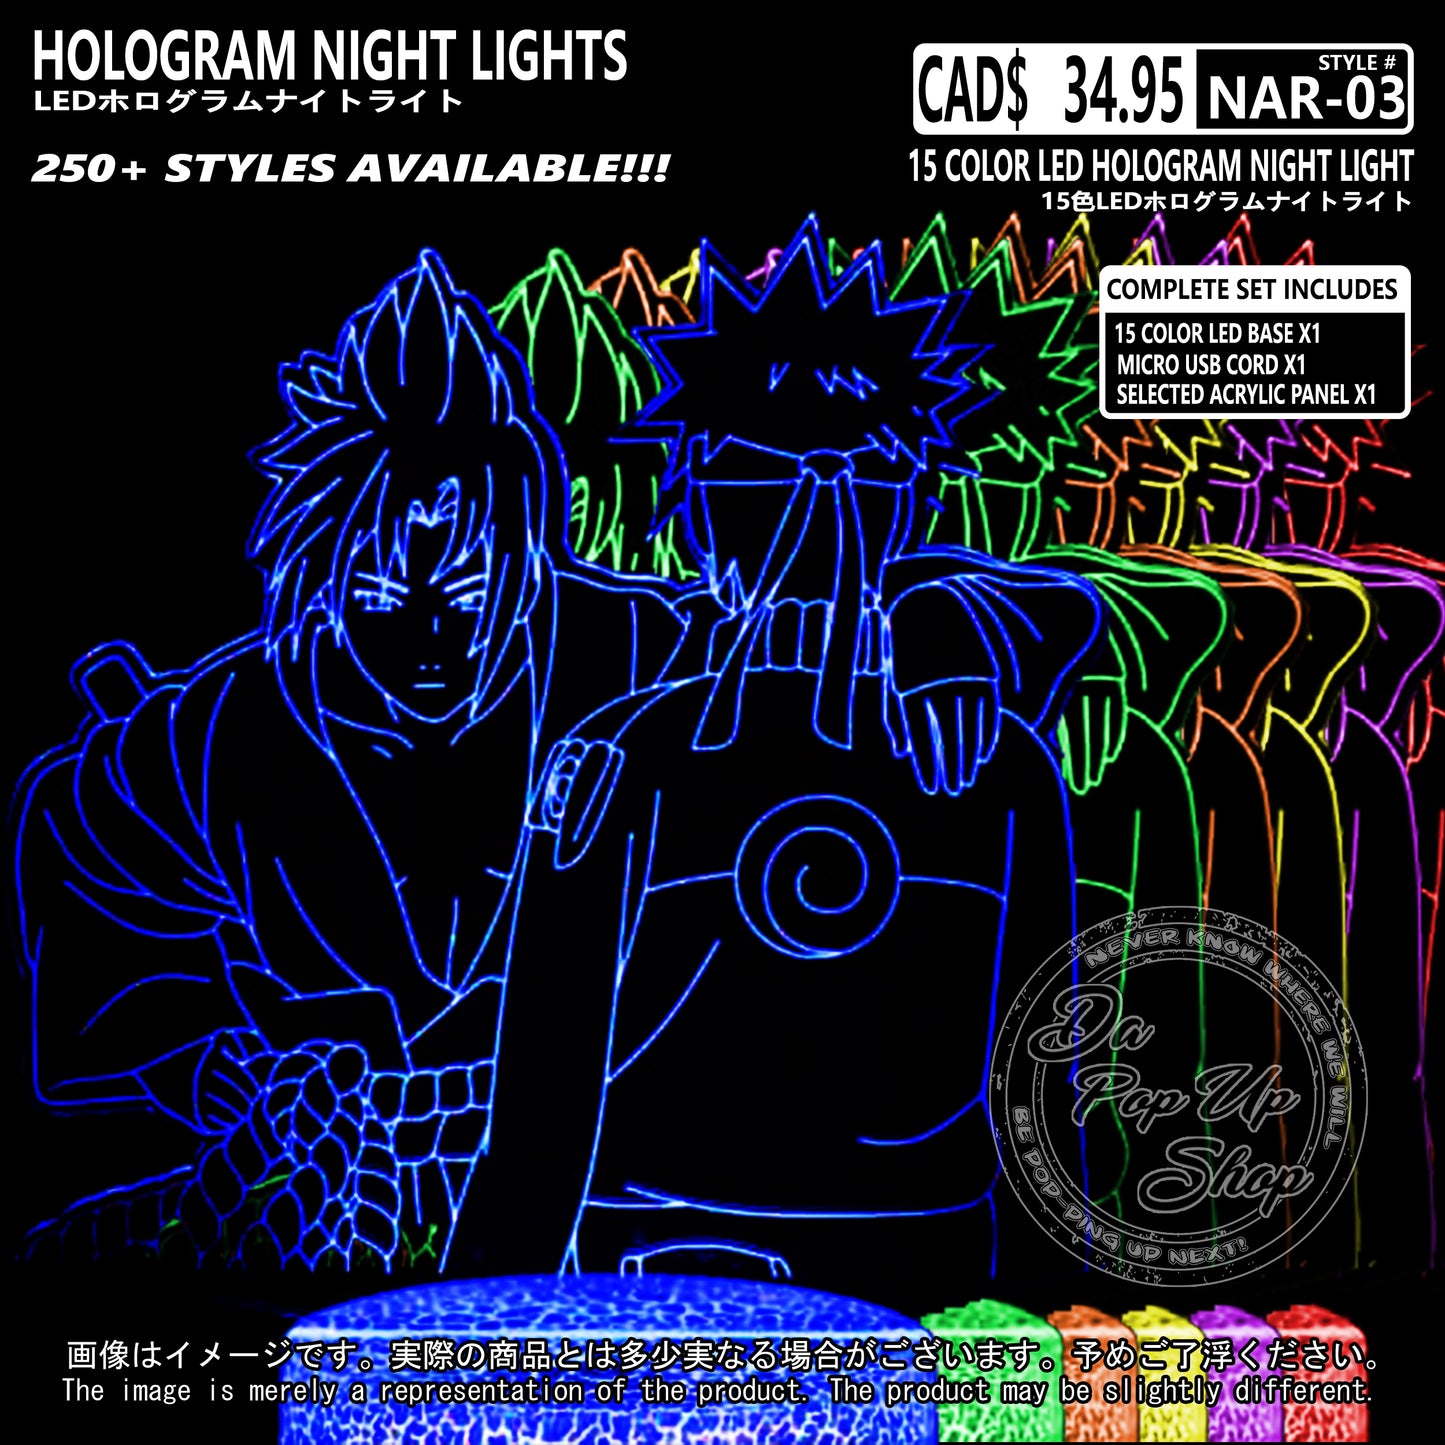 (NAR-03) Naruto Hologram LED Night Light